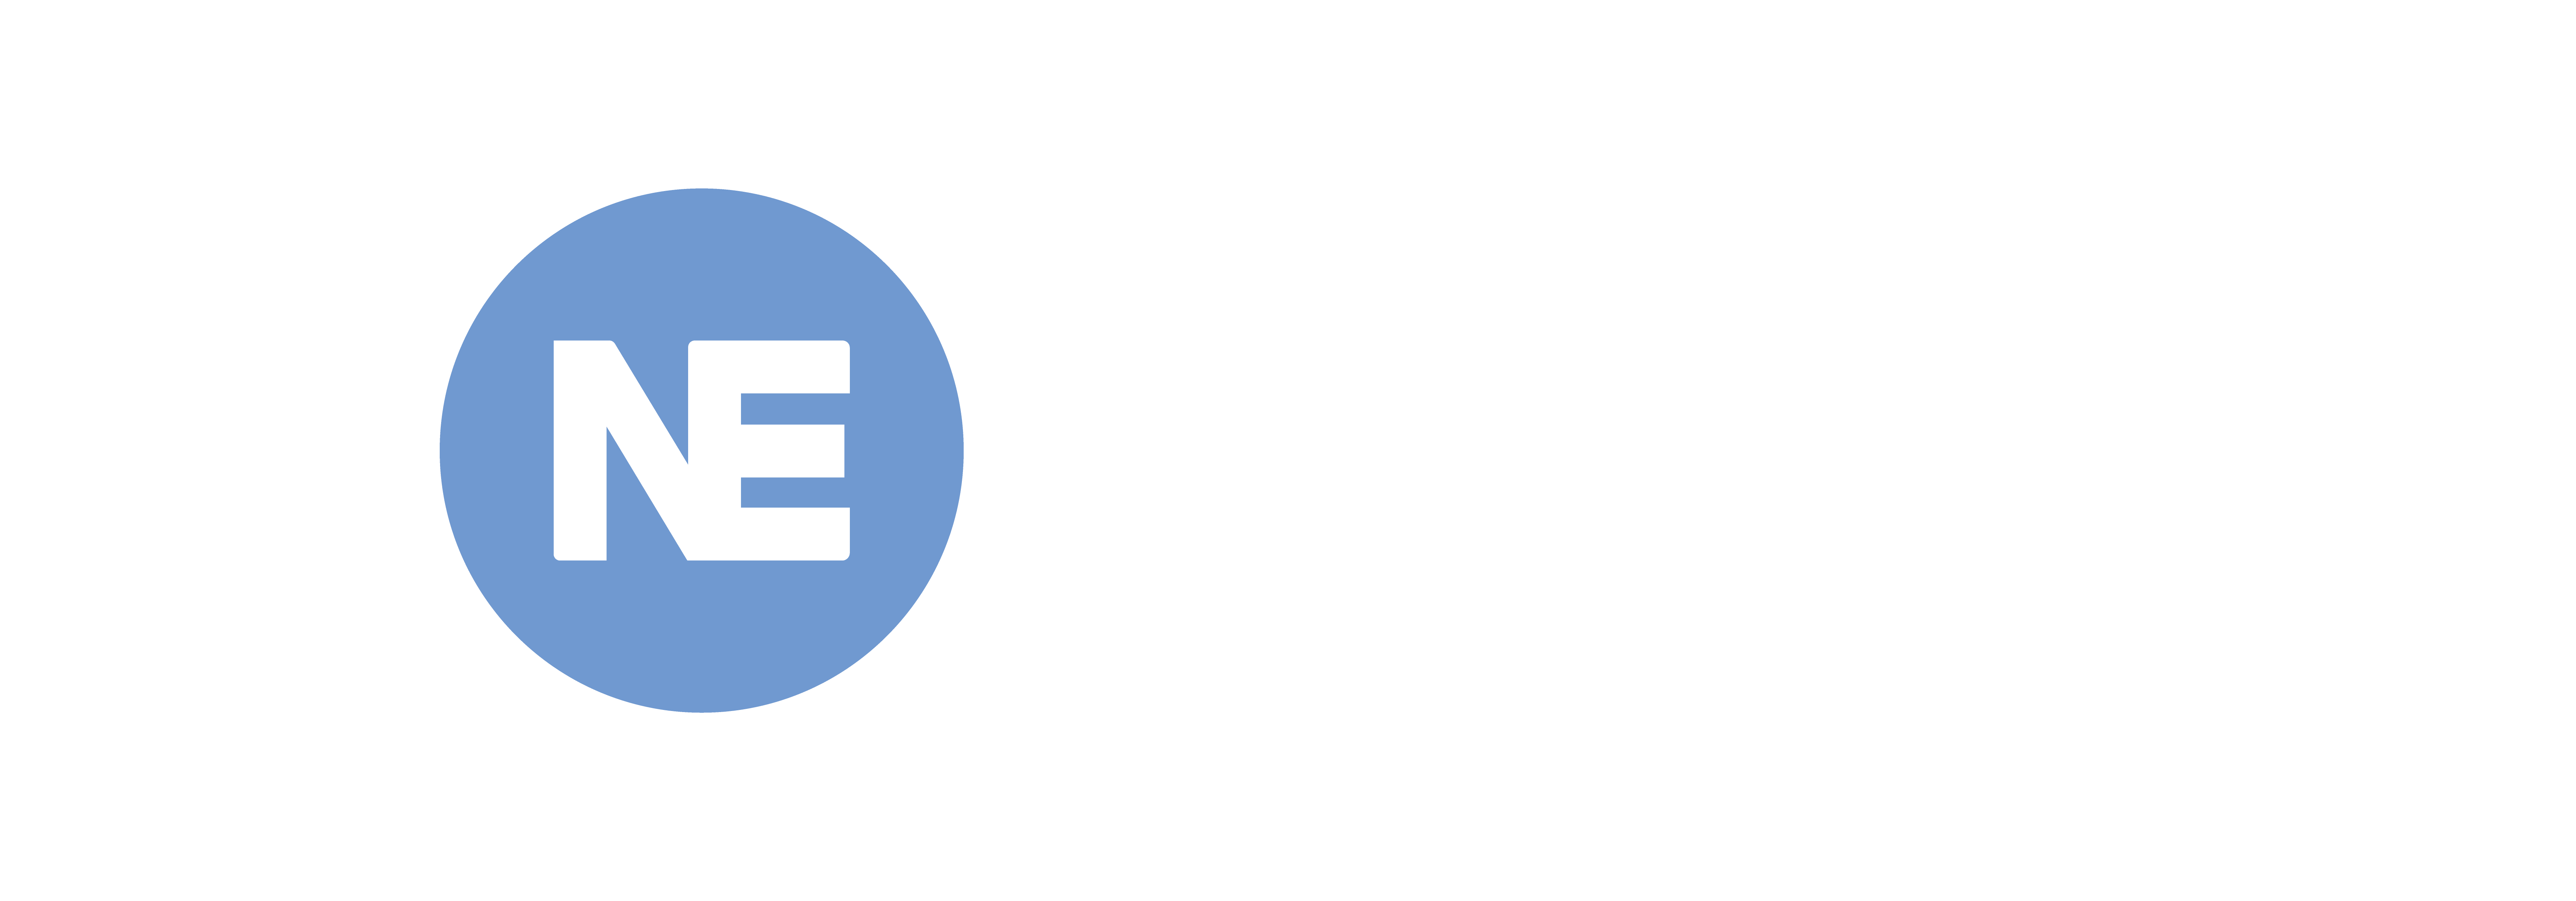 Logo proyecto GNE